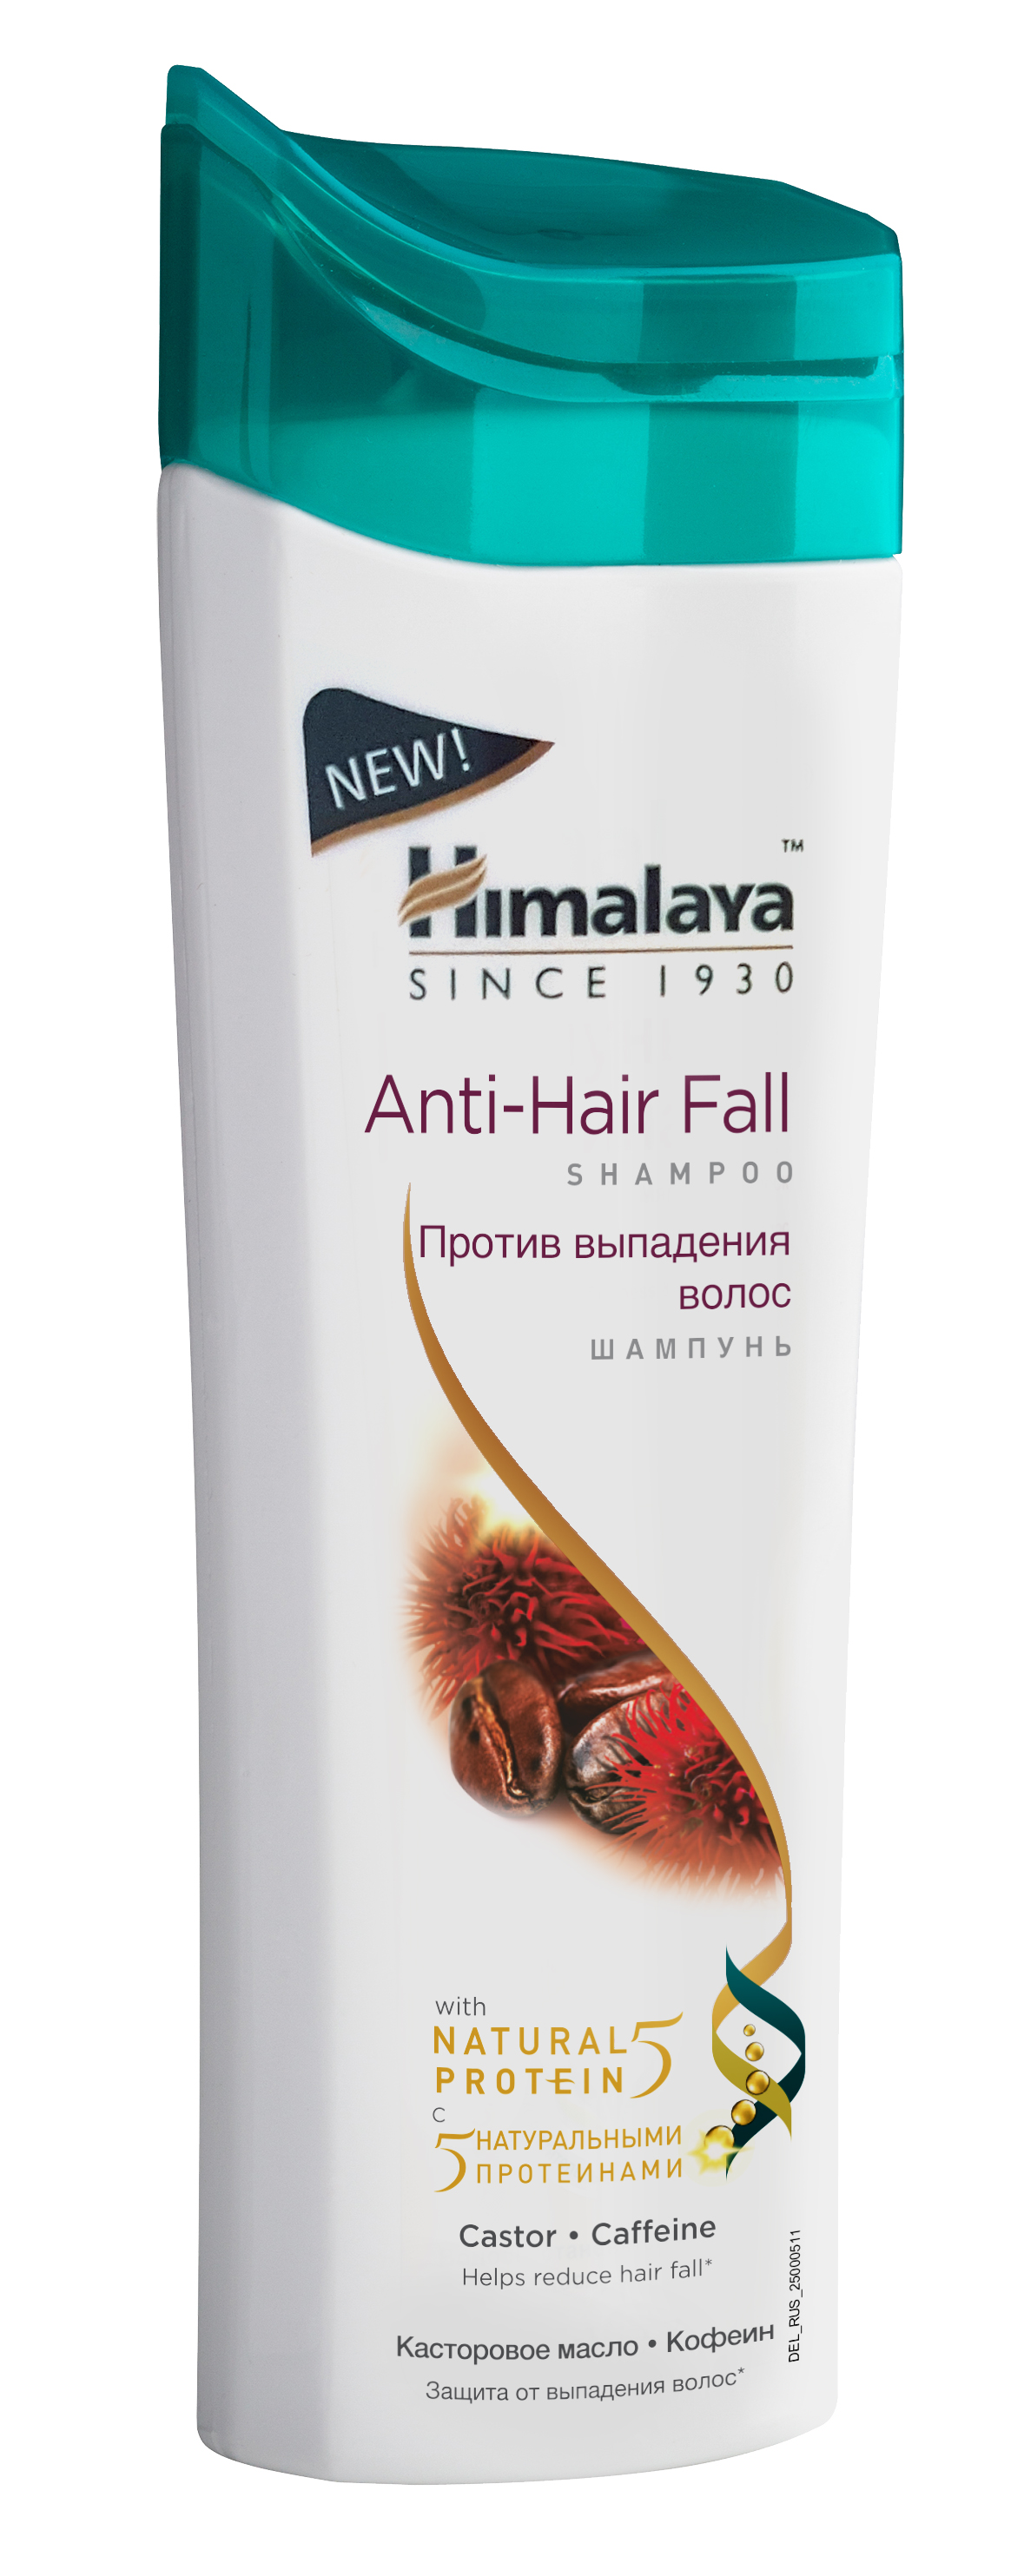 ANTI-HAIR FALL Protein Shampoo, Himalaya (Шампунь ПРОТИВ ВЫПАДЕНИЯ ВОЛОС, для всех типов волос, Хималая), 200 мл.